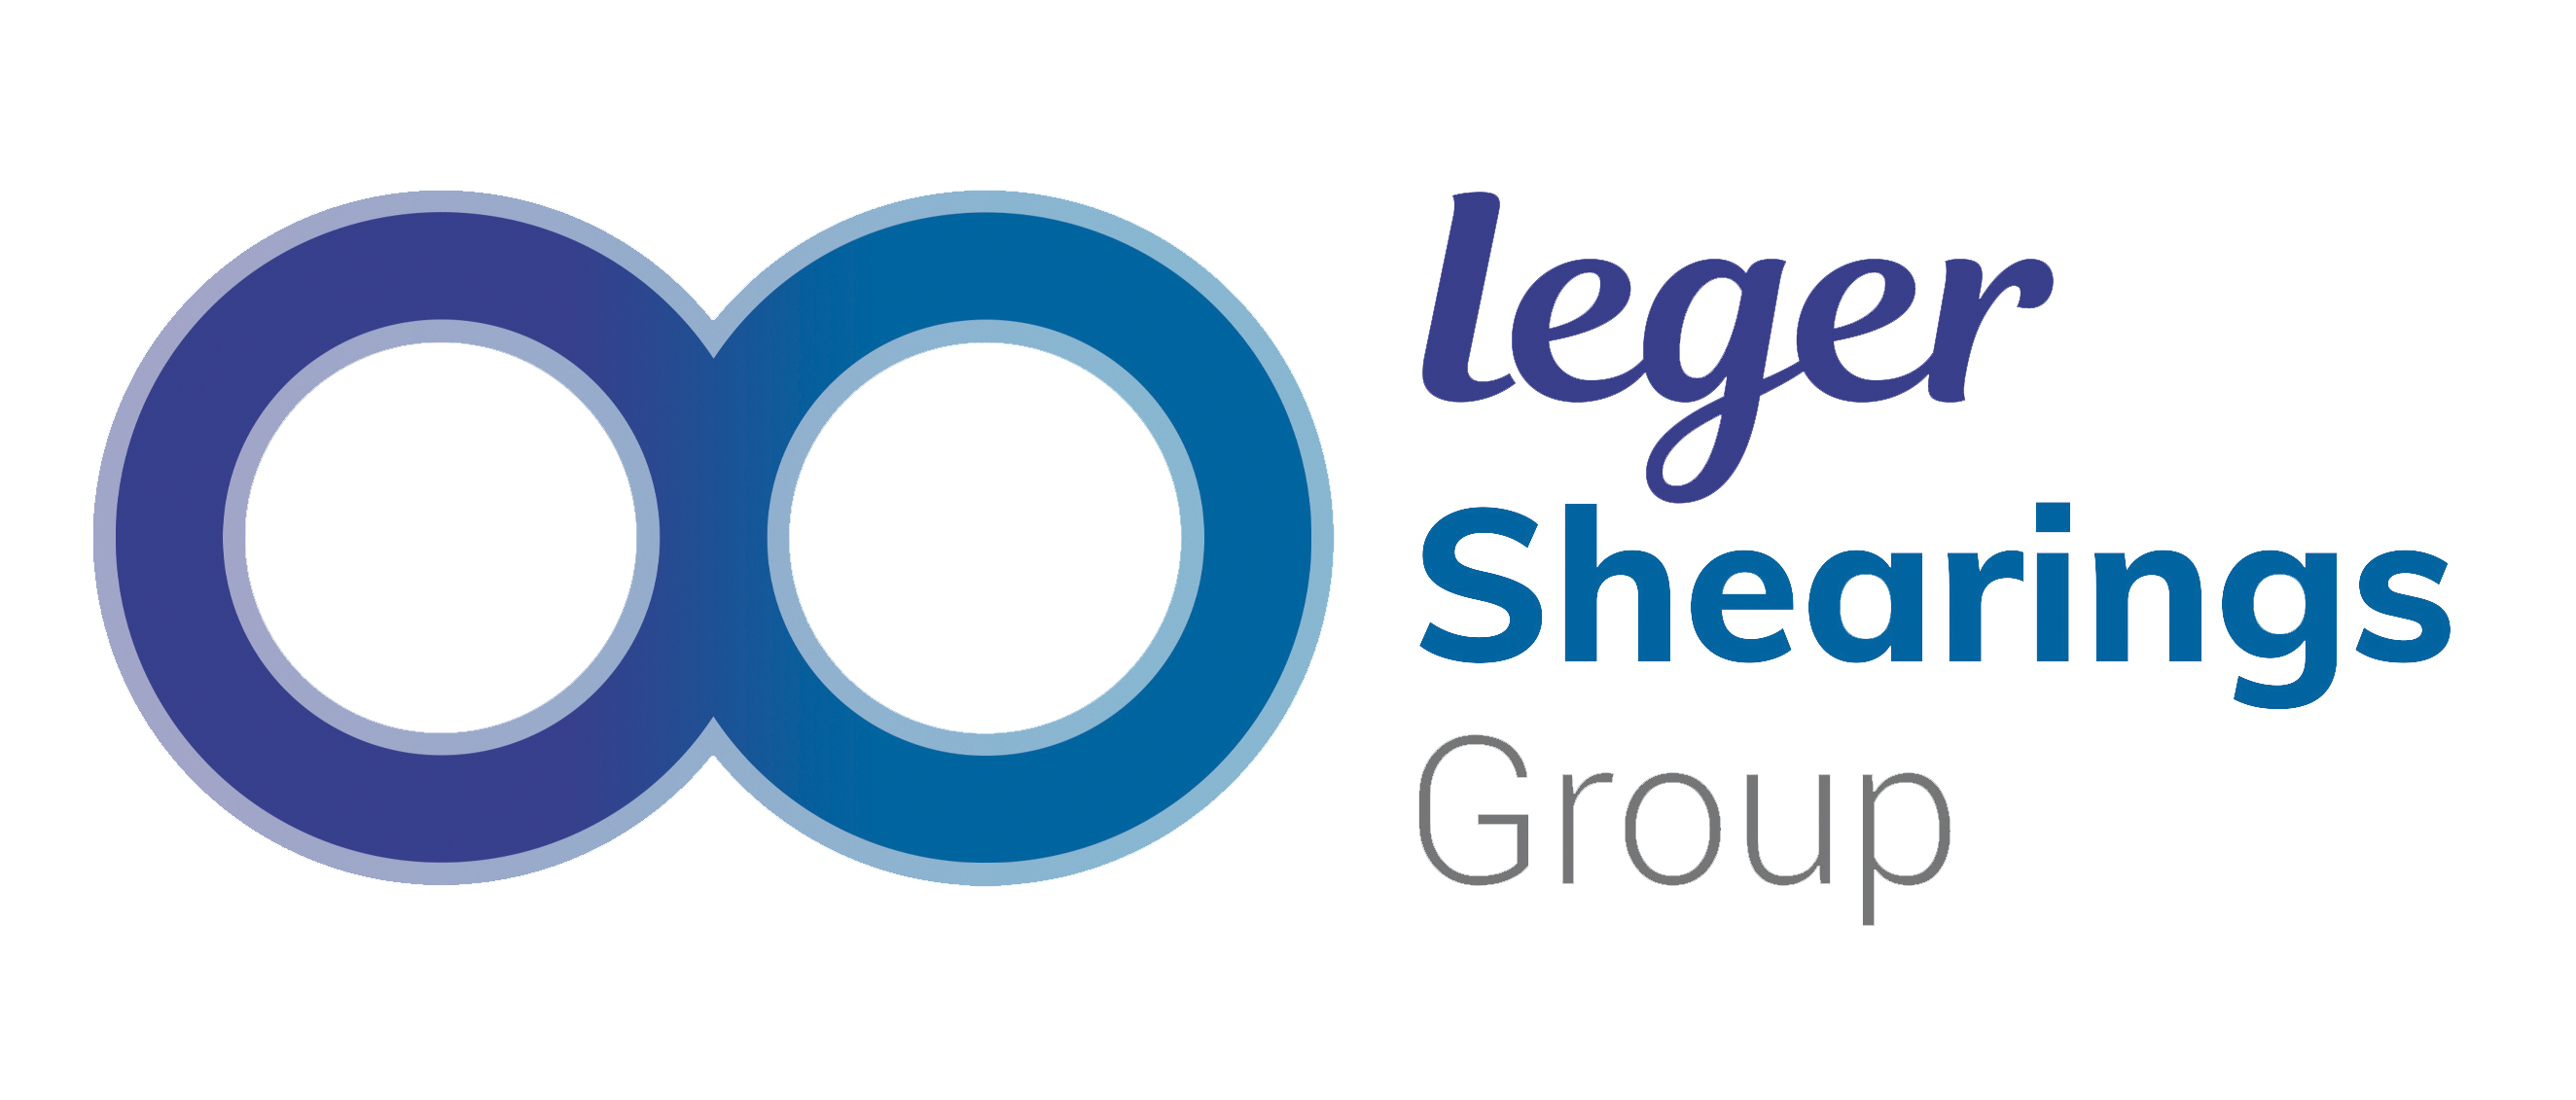 Leger Shearings Group logo